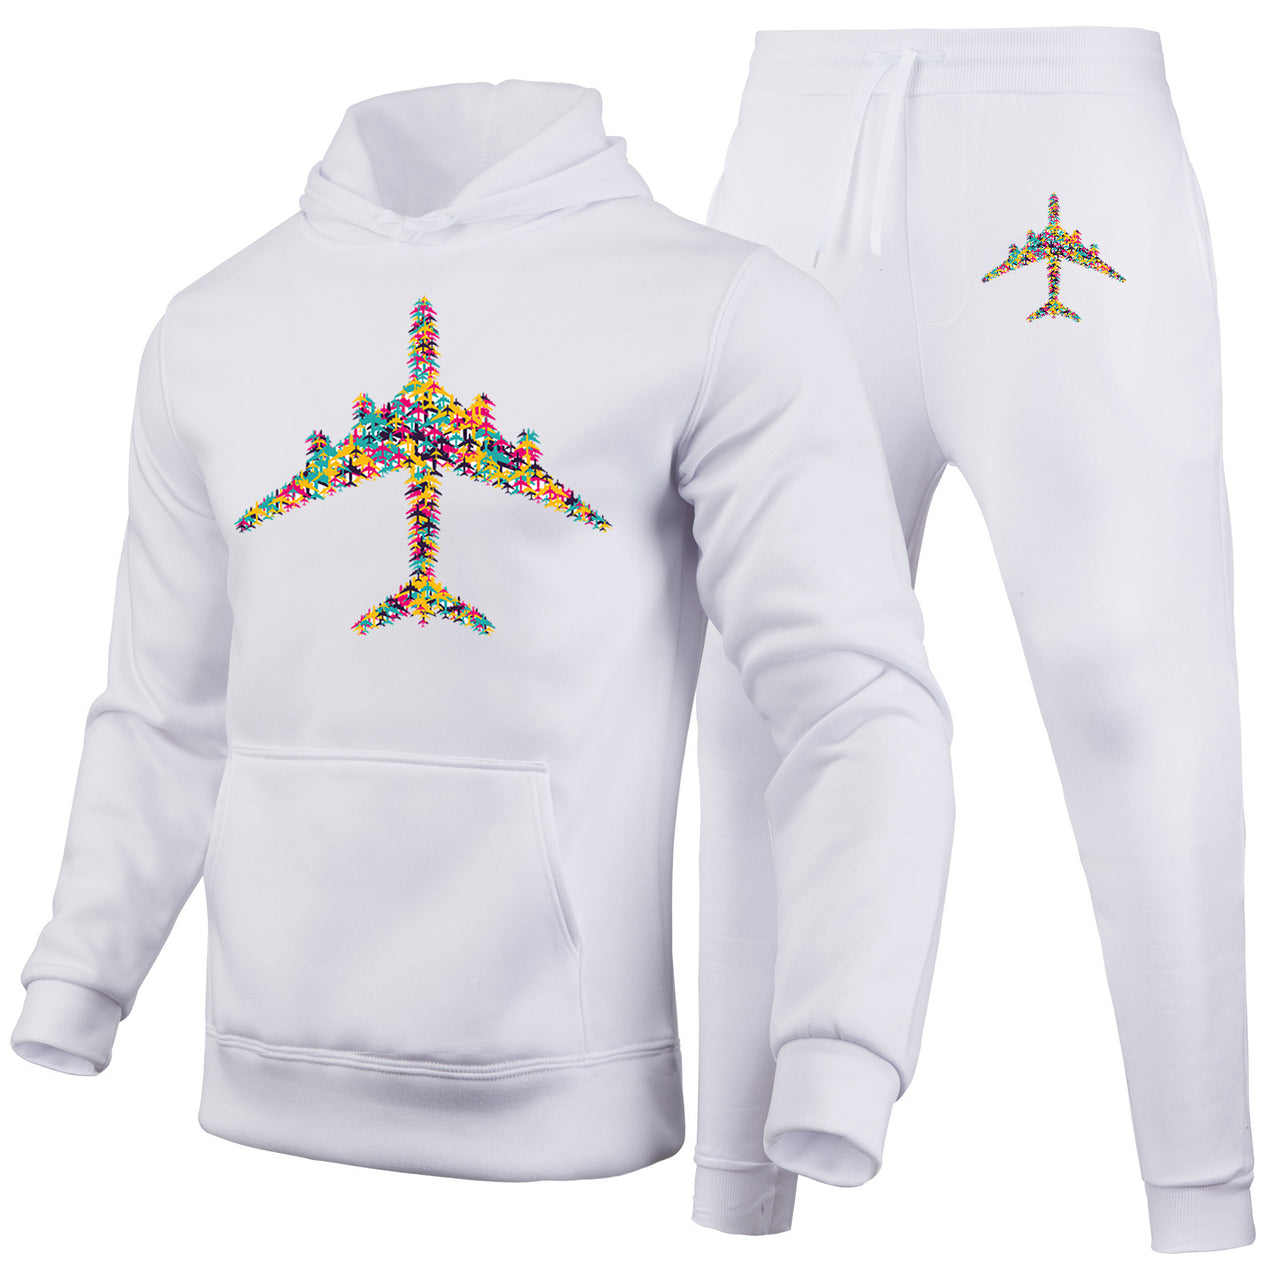 Colourful Airplane Designed Hoodies & Sweatpants Set